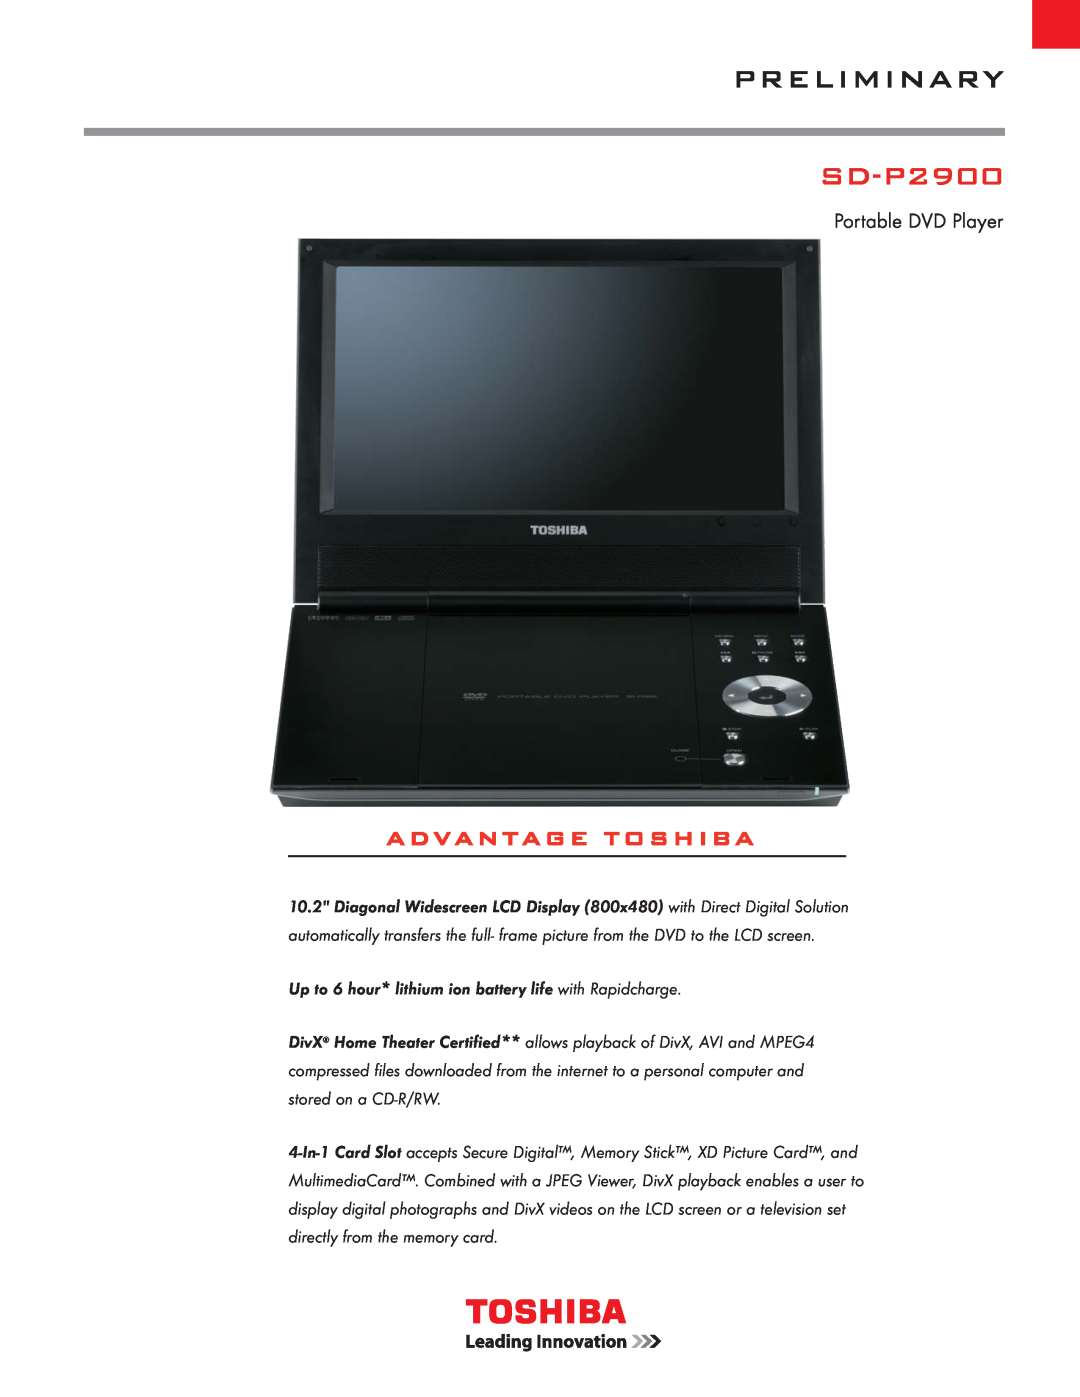 Toshiba SD-P2900 manual Preliminary, Advantage Toshiba, Portable DVD Player 